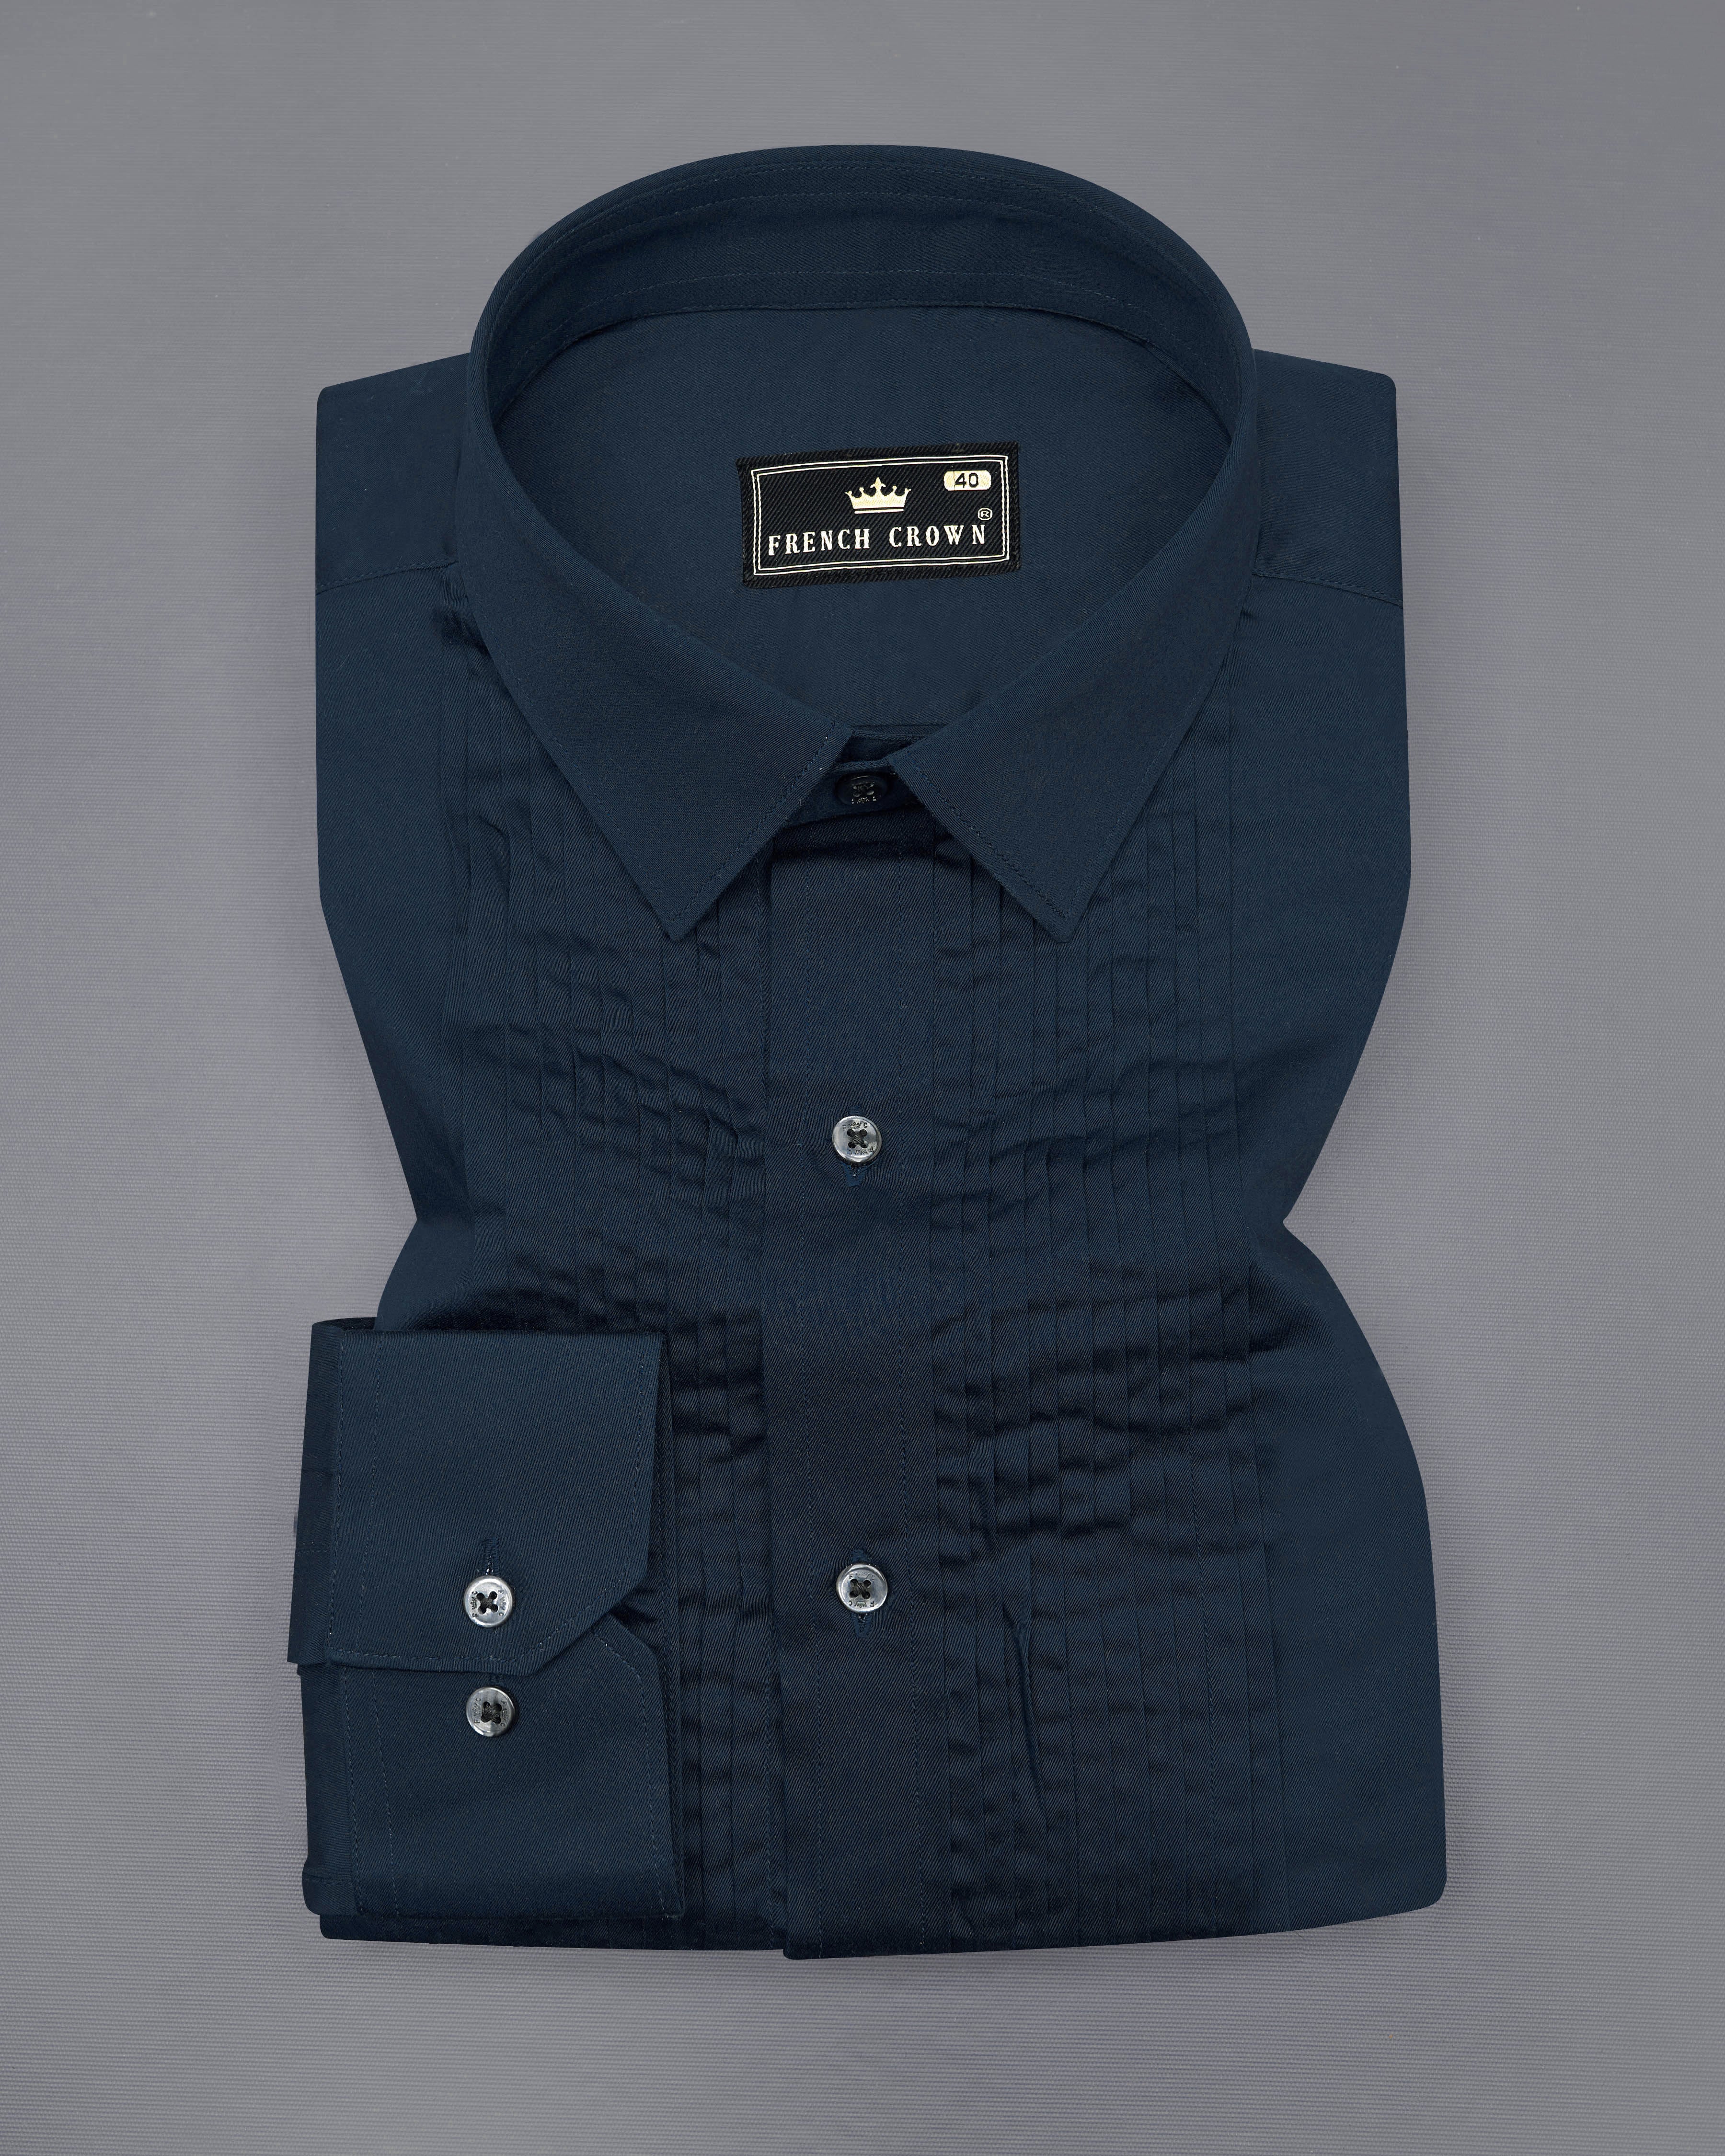 Baltic Sea Navy Blue Subtle Sheen Snake Pleated Super Soft Premium Cotton Tuxedo Shirt